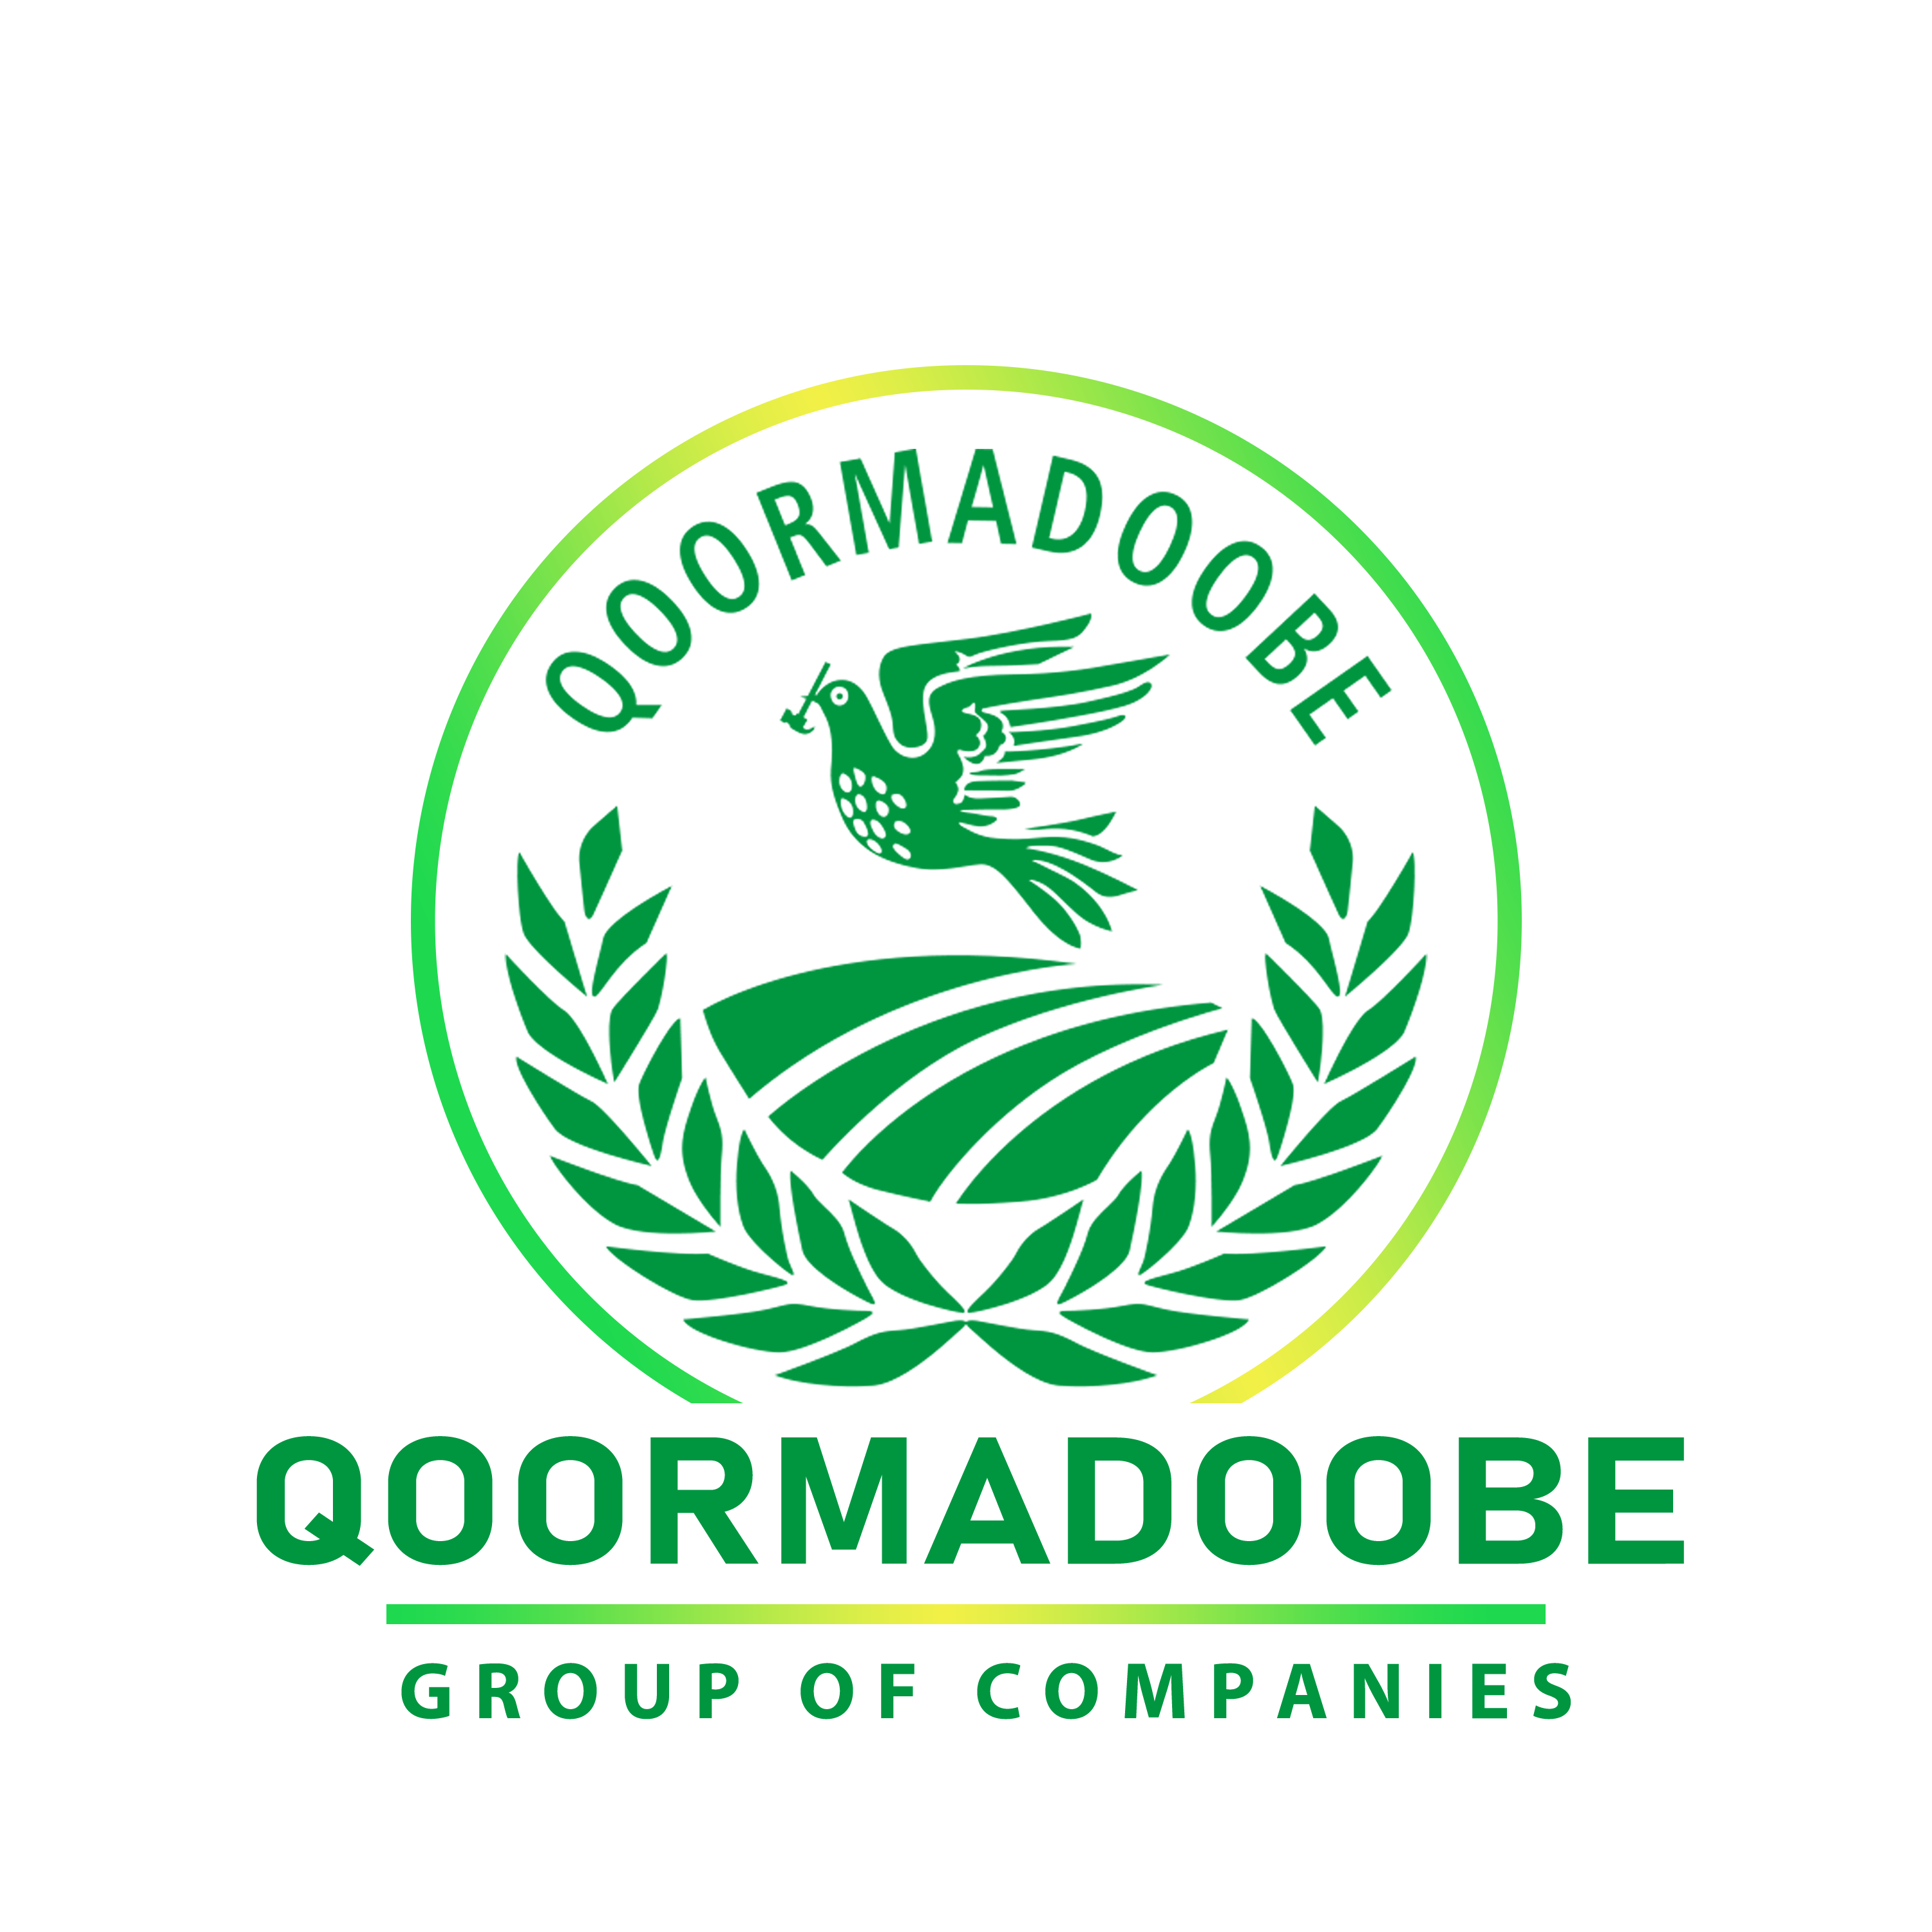 Qoormadoobe General Trading Company